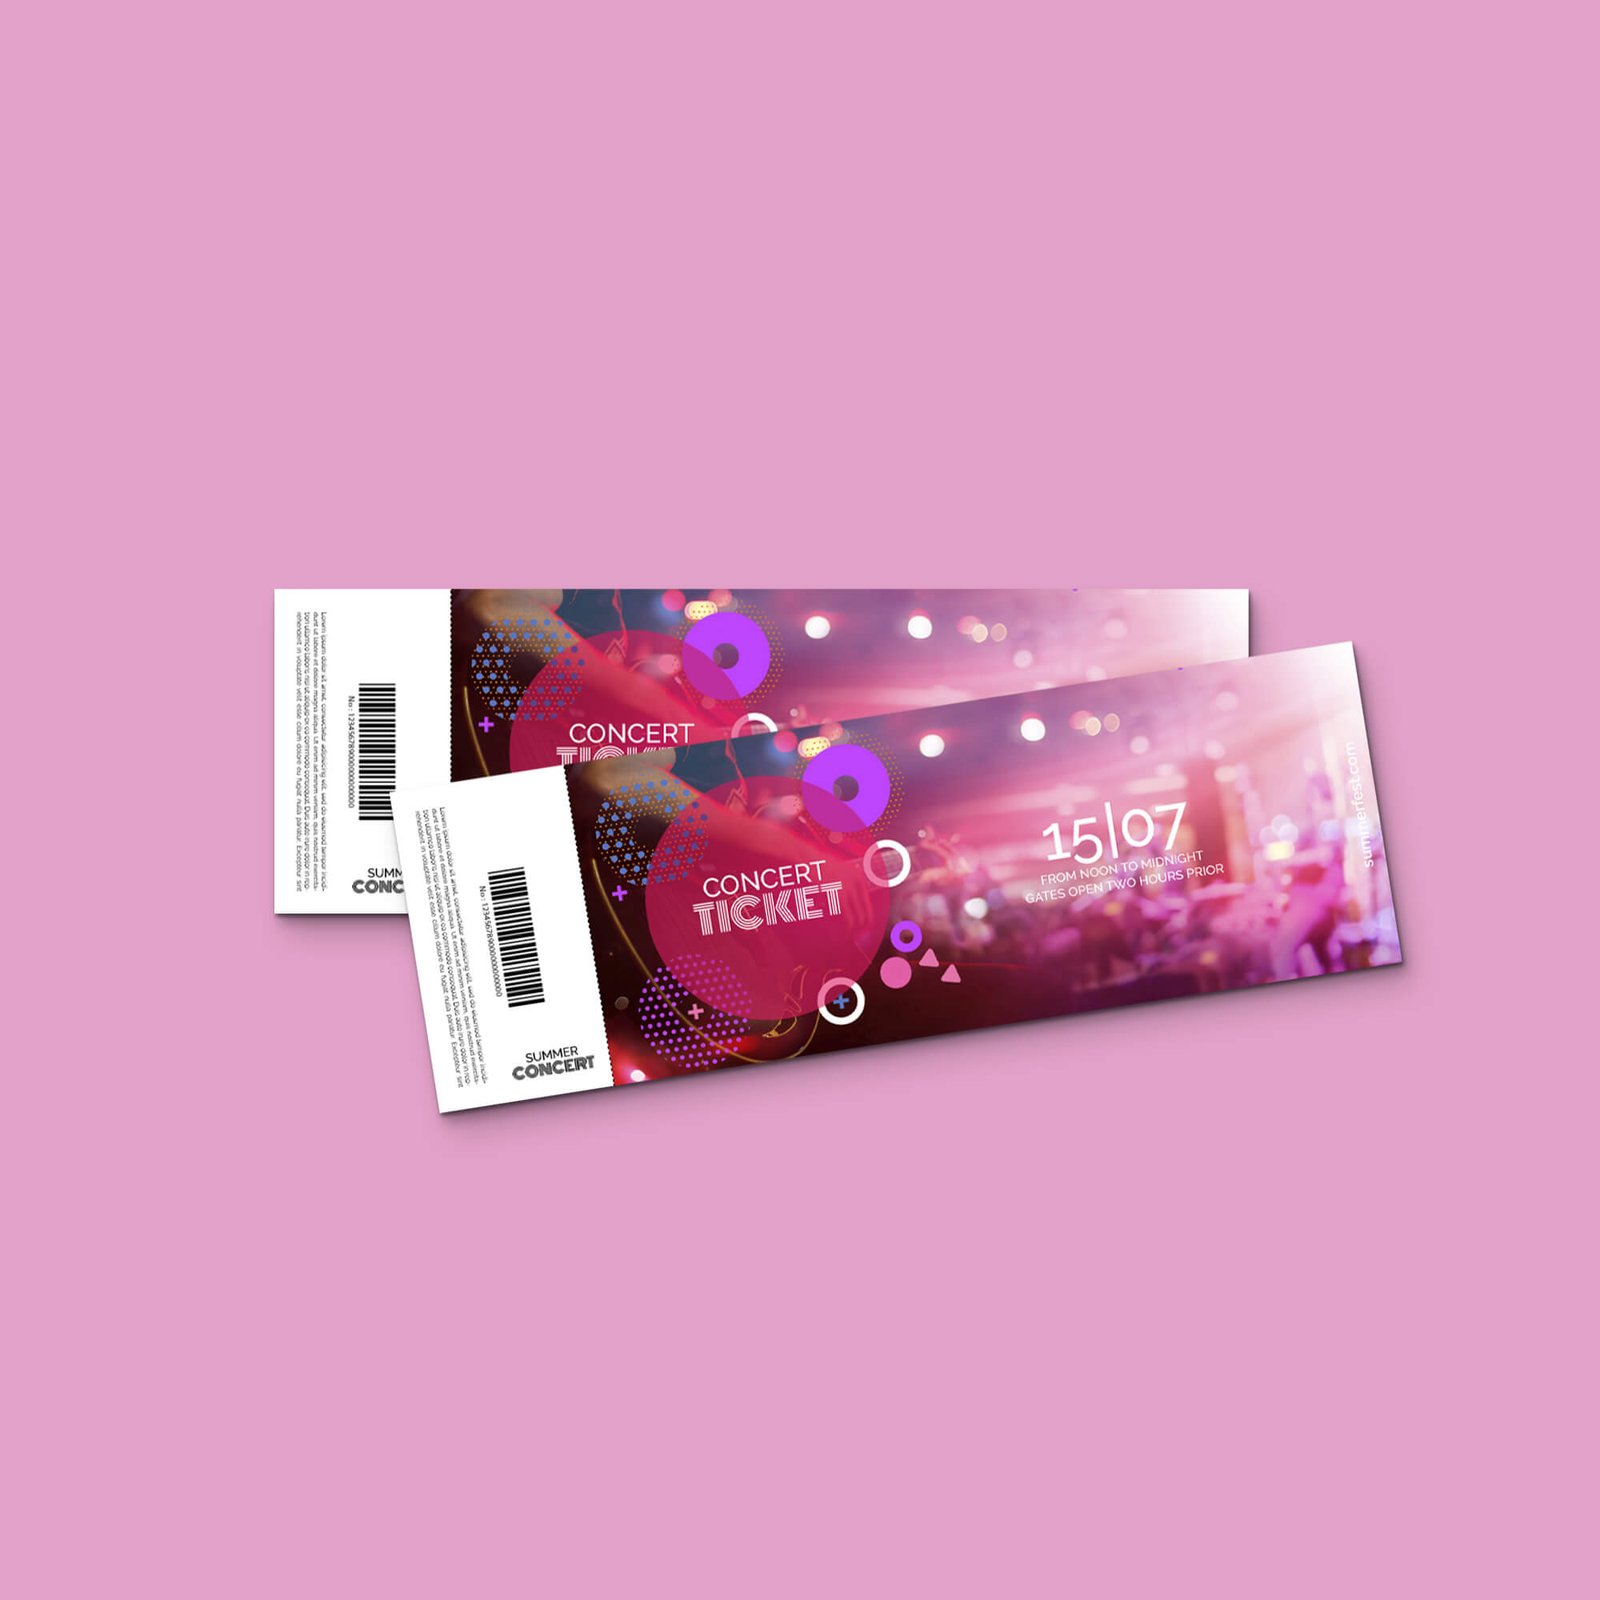 Design Free Concert Ticket Mockup PSD Template